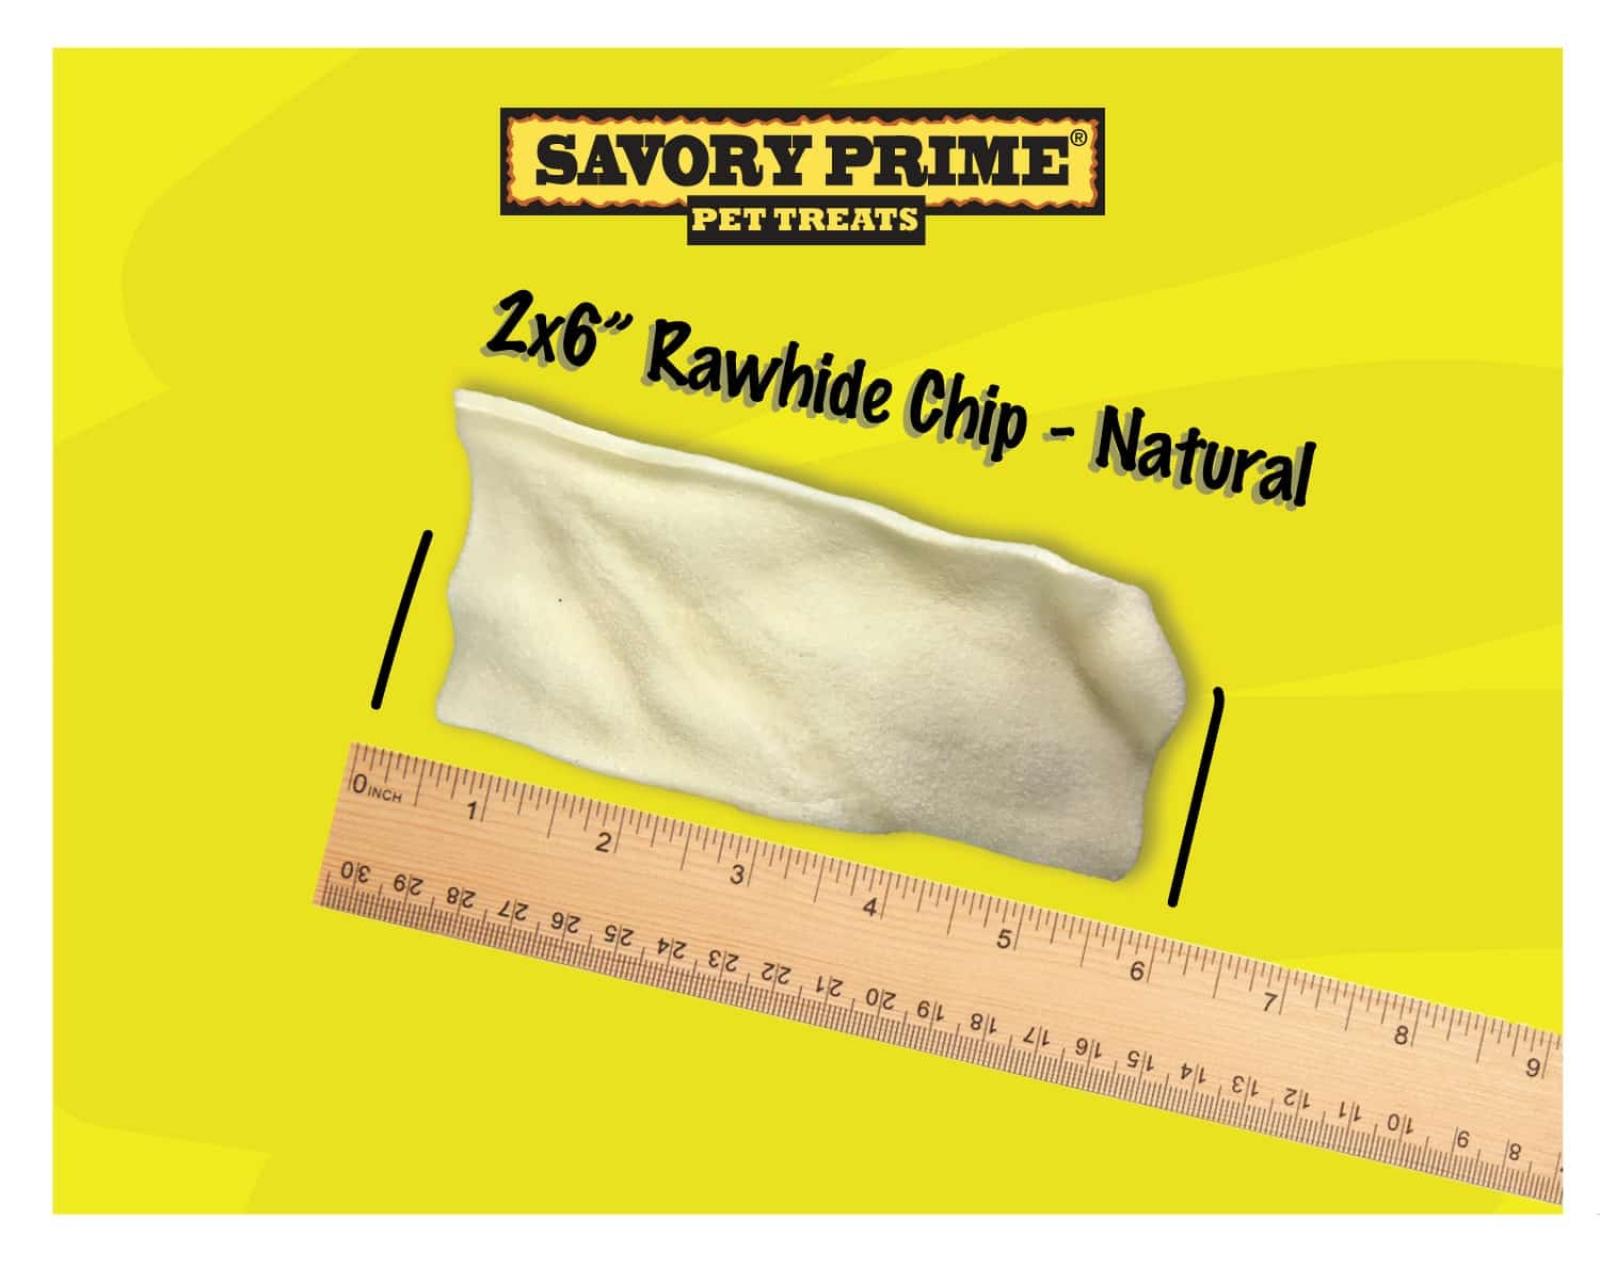 Savory Prime Natural Rawhide Chips